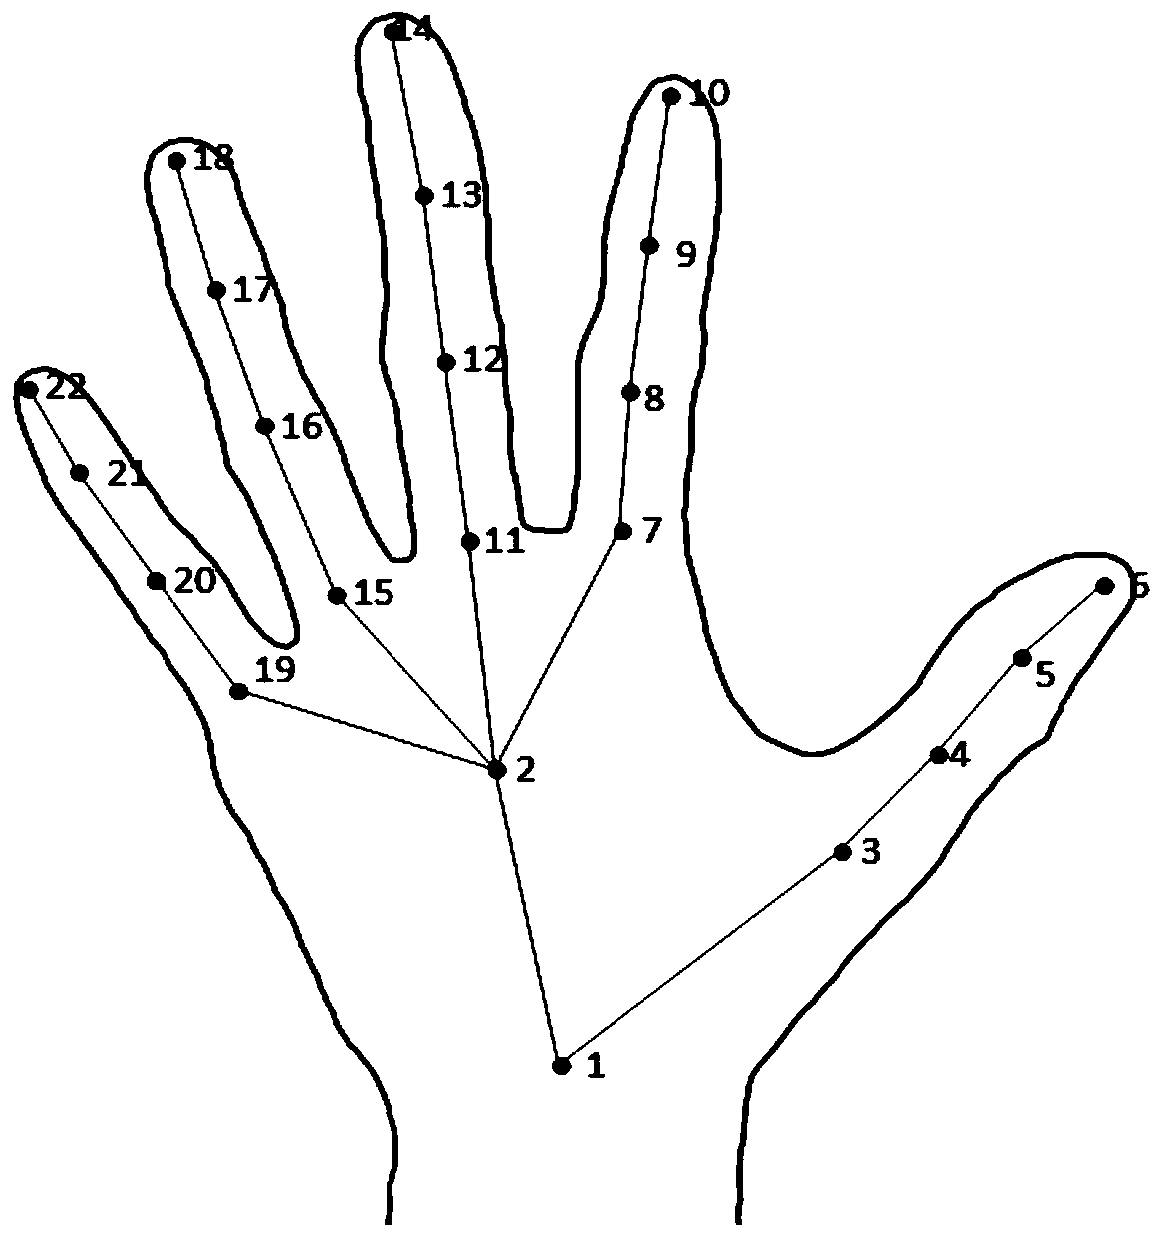 Gesture recognition method and system based on skeleton